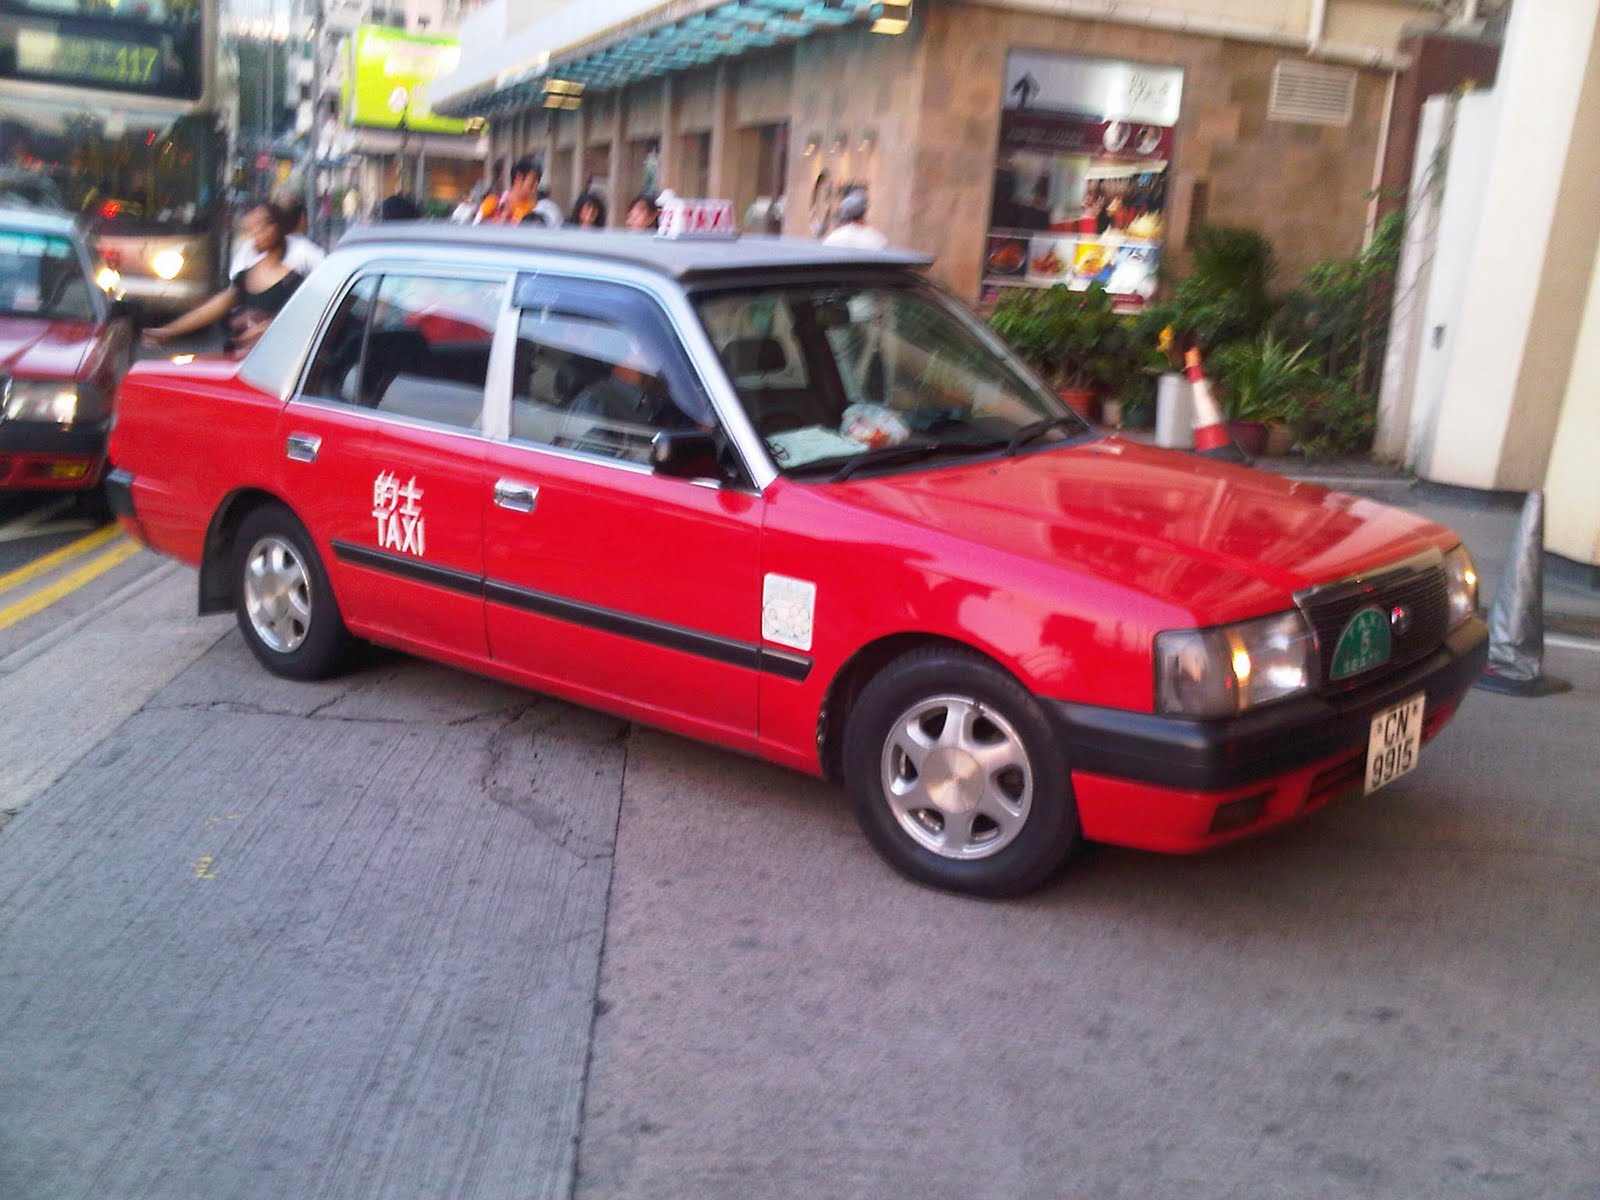 hk taxi